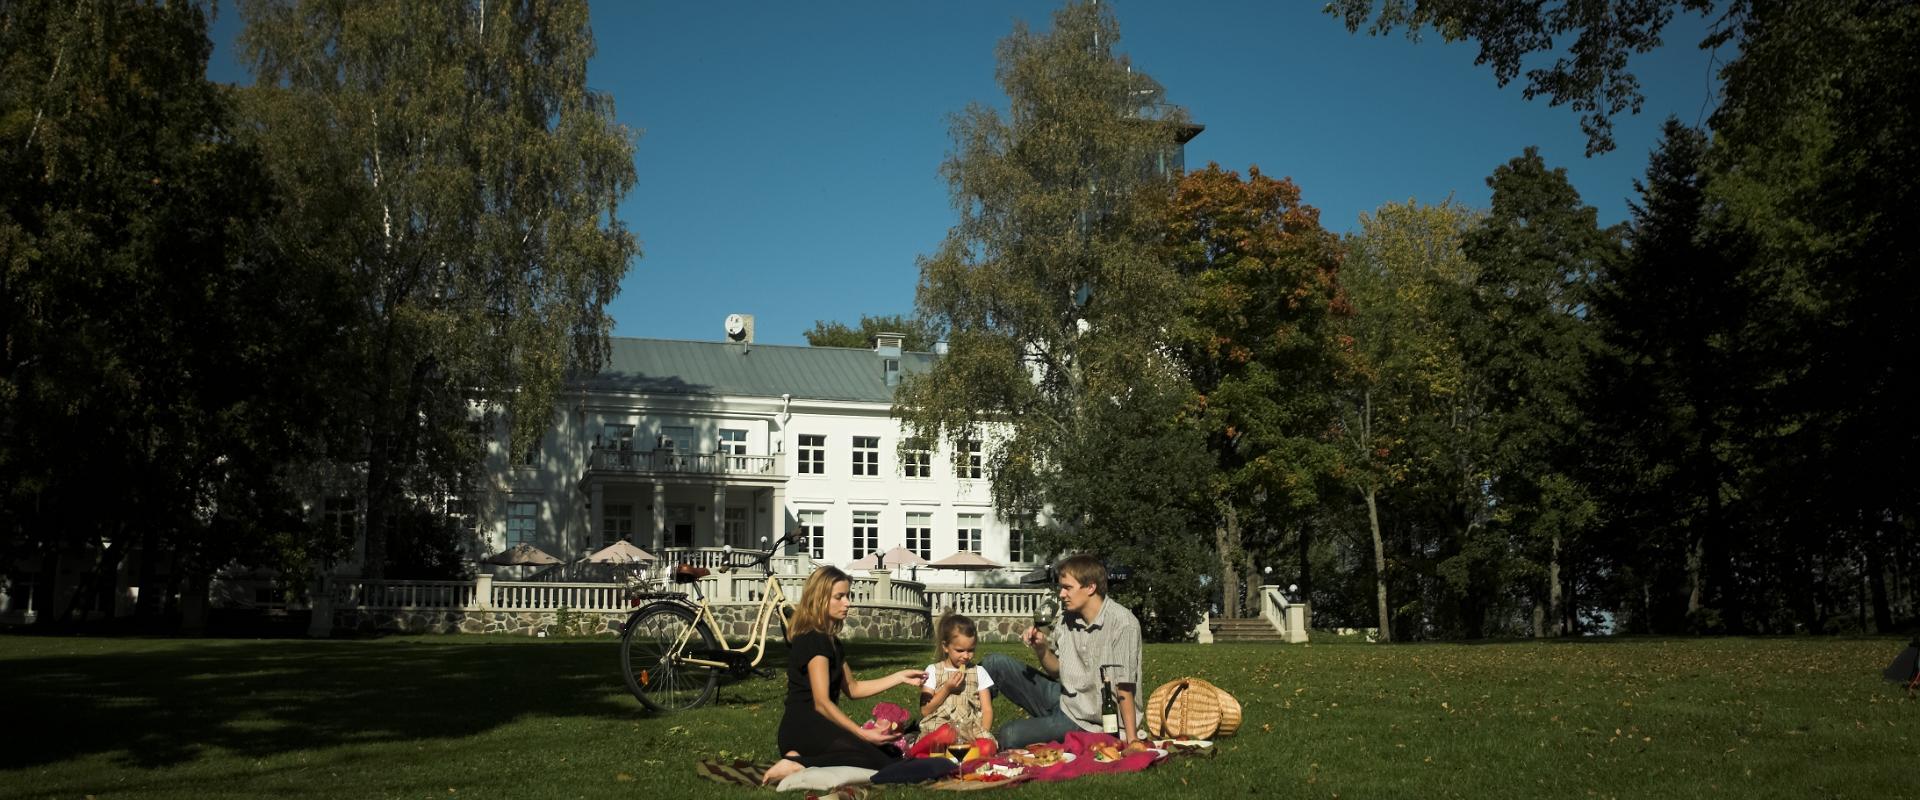 Pühajärve Spa & Holiday Resort – family picnic in the park